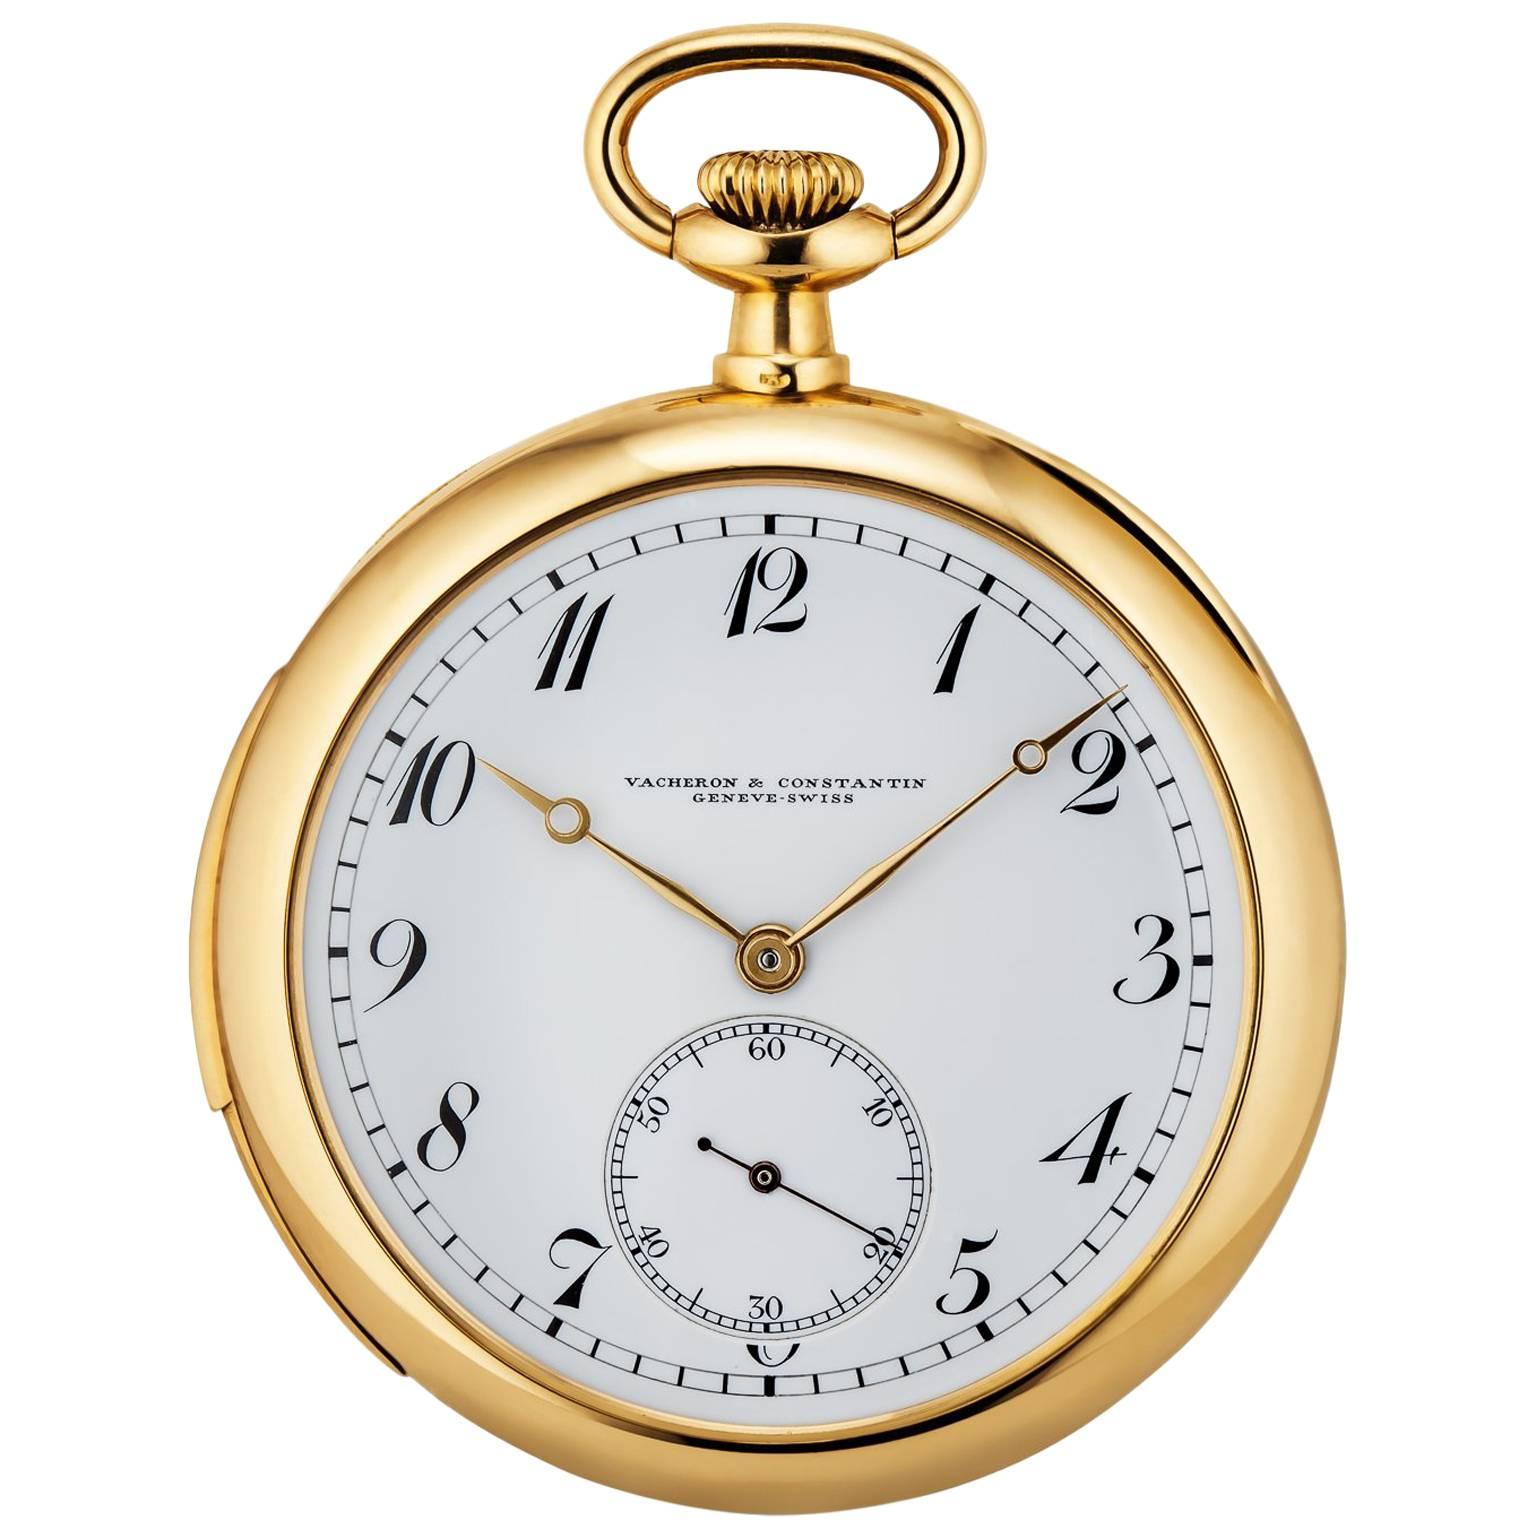 Vacheron & Constantin yellow Gold Minute Repeater Art Deco Pocket Watch